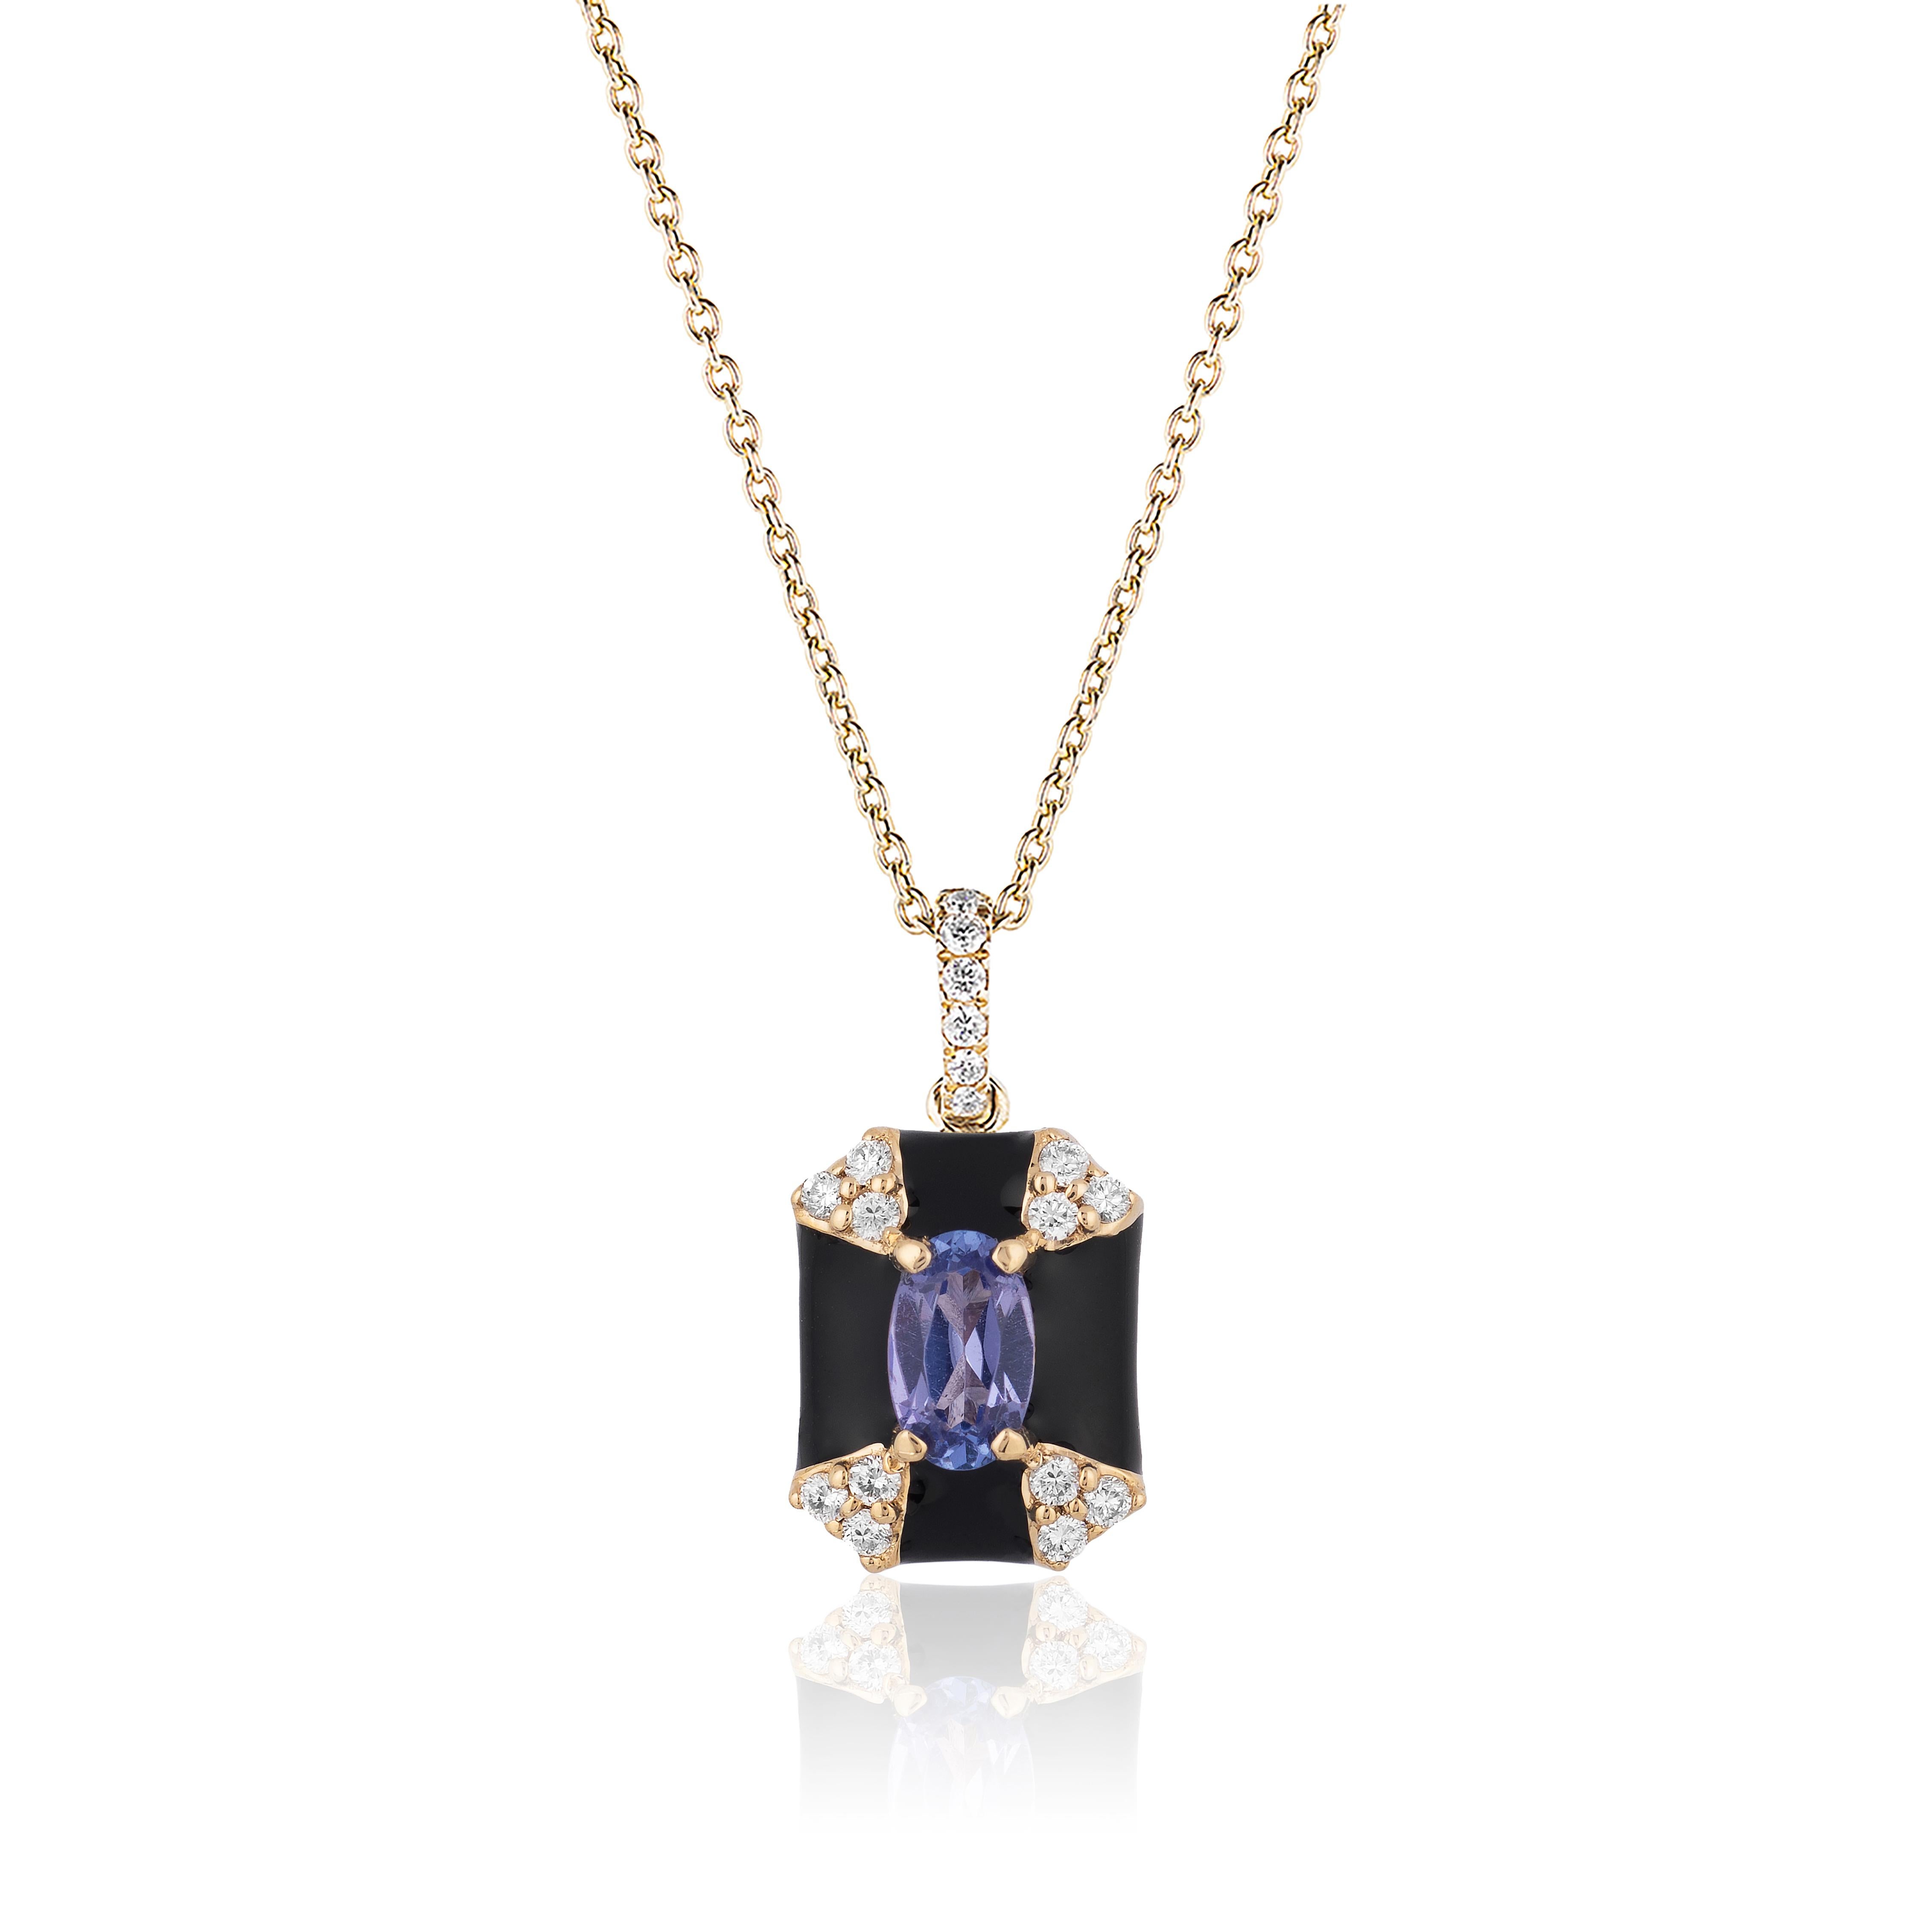 Contemporary Goshwara Octagon Black Enamel with Sapphire and Diamonds Pendant